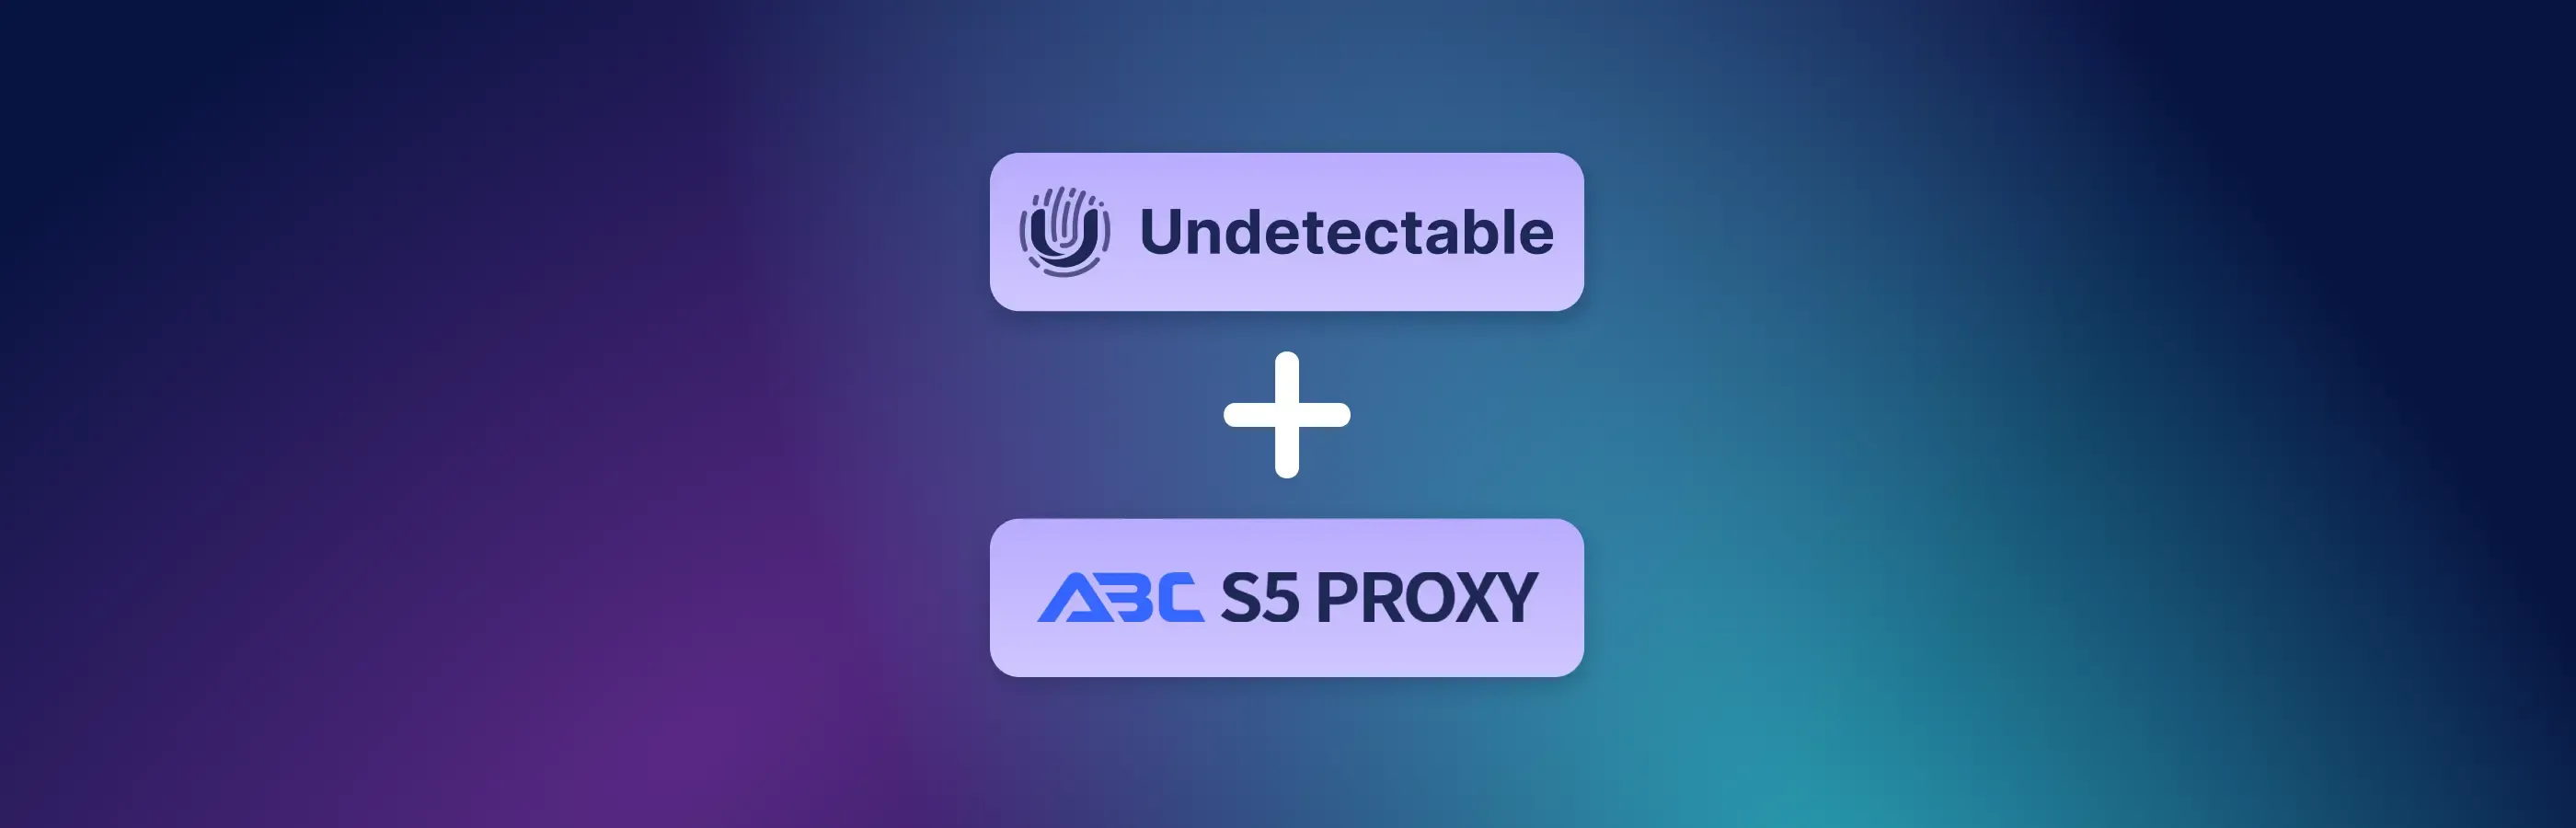 ABCProxyをUndetectableに接続するための手順です。